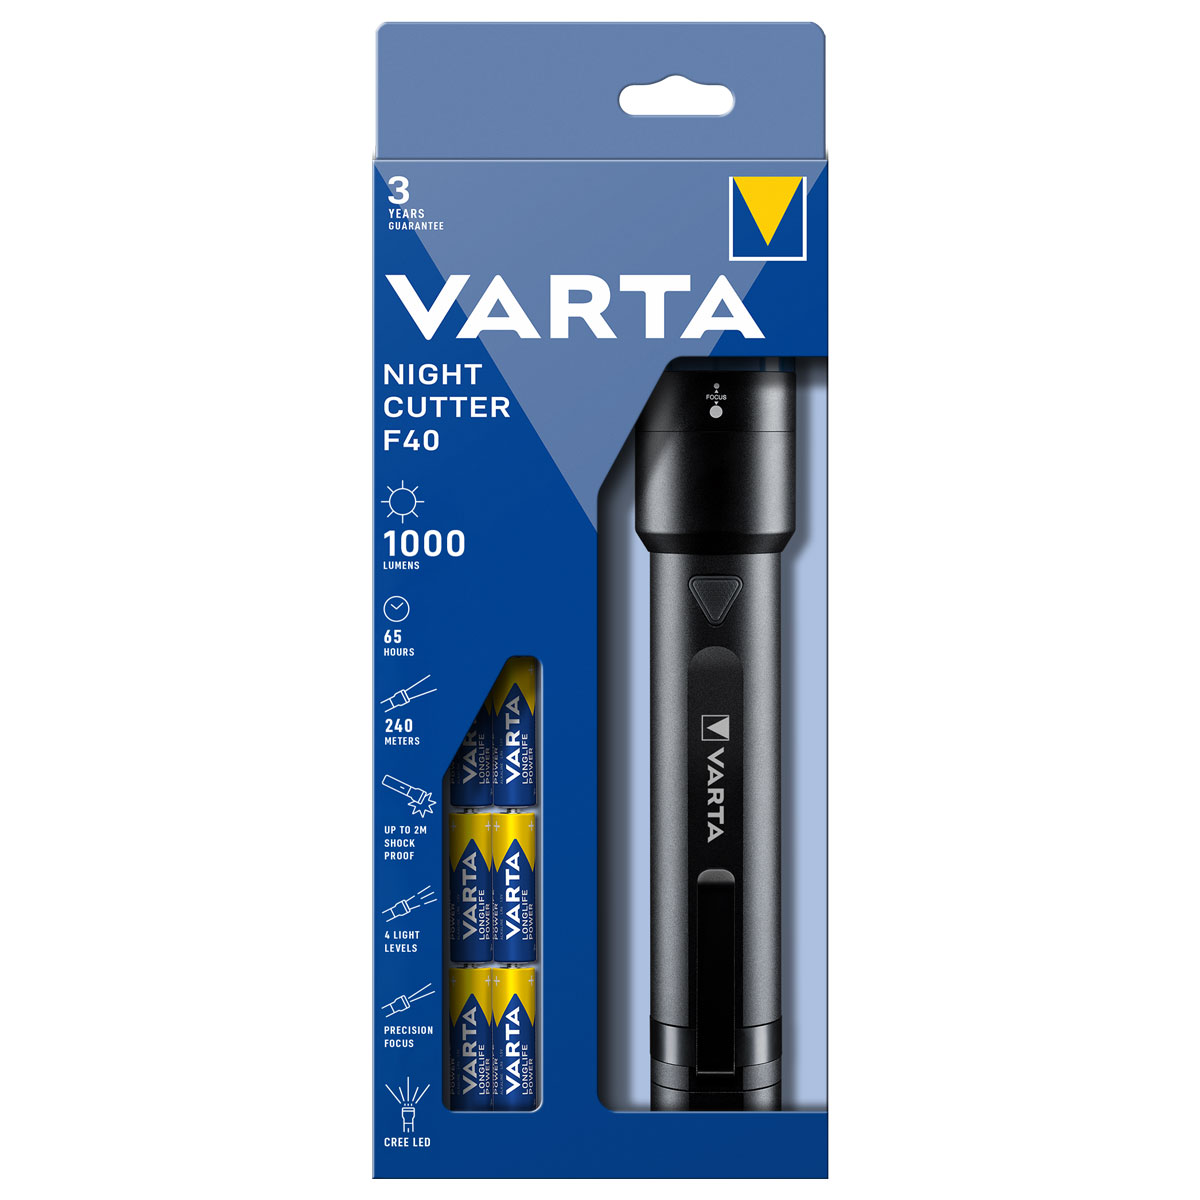 Varta Night Cutter F40 Taschenlampe inkl. 6x AA Batterien